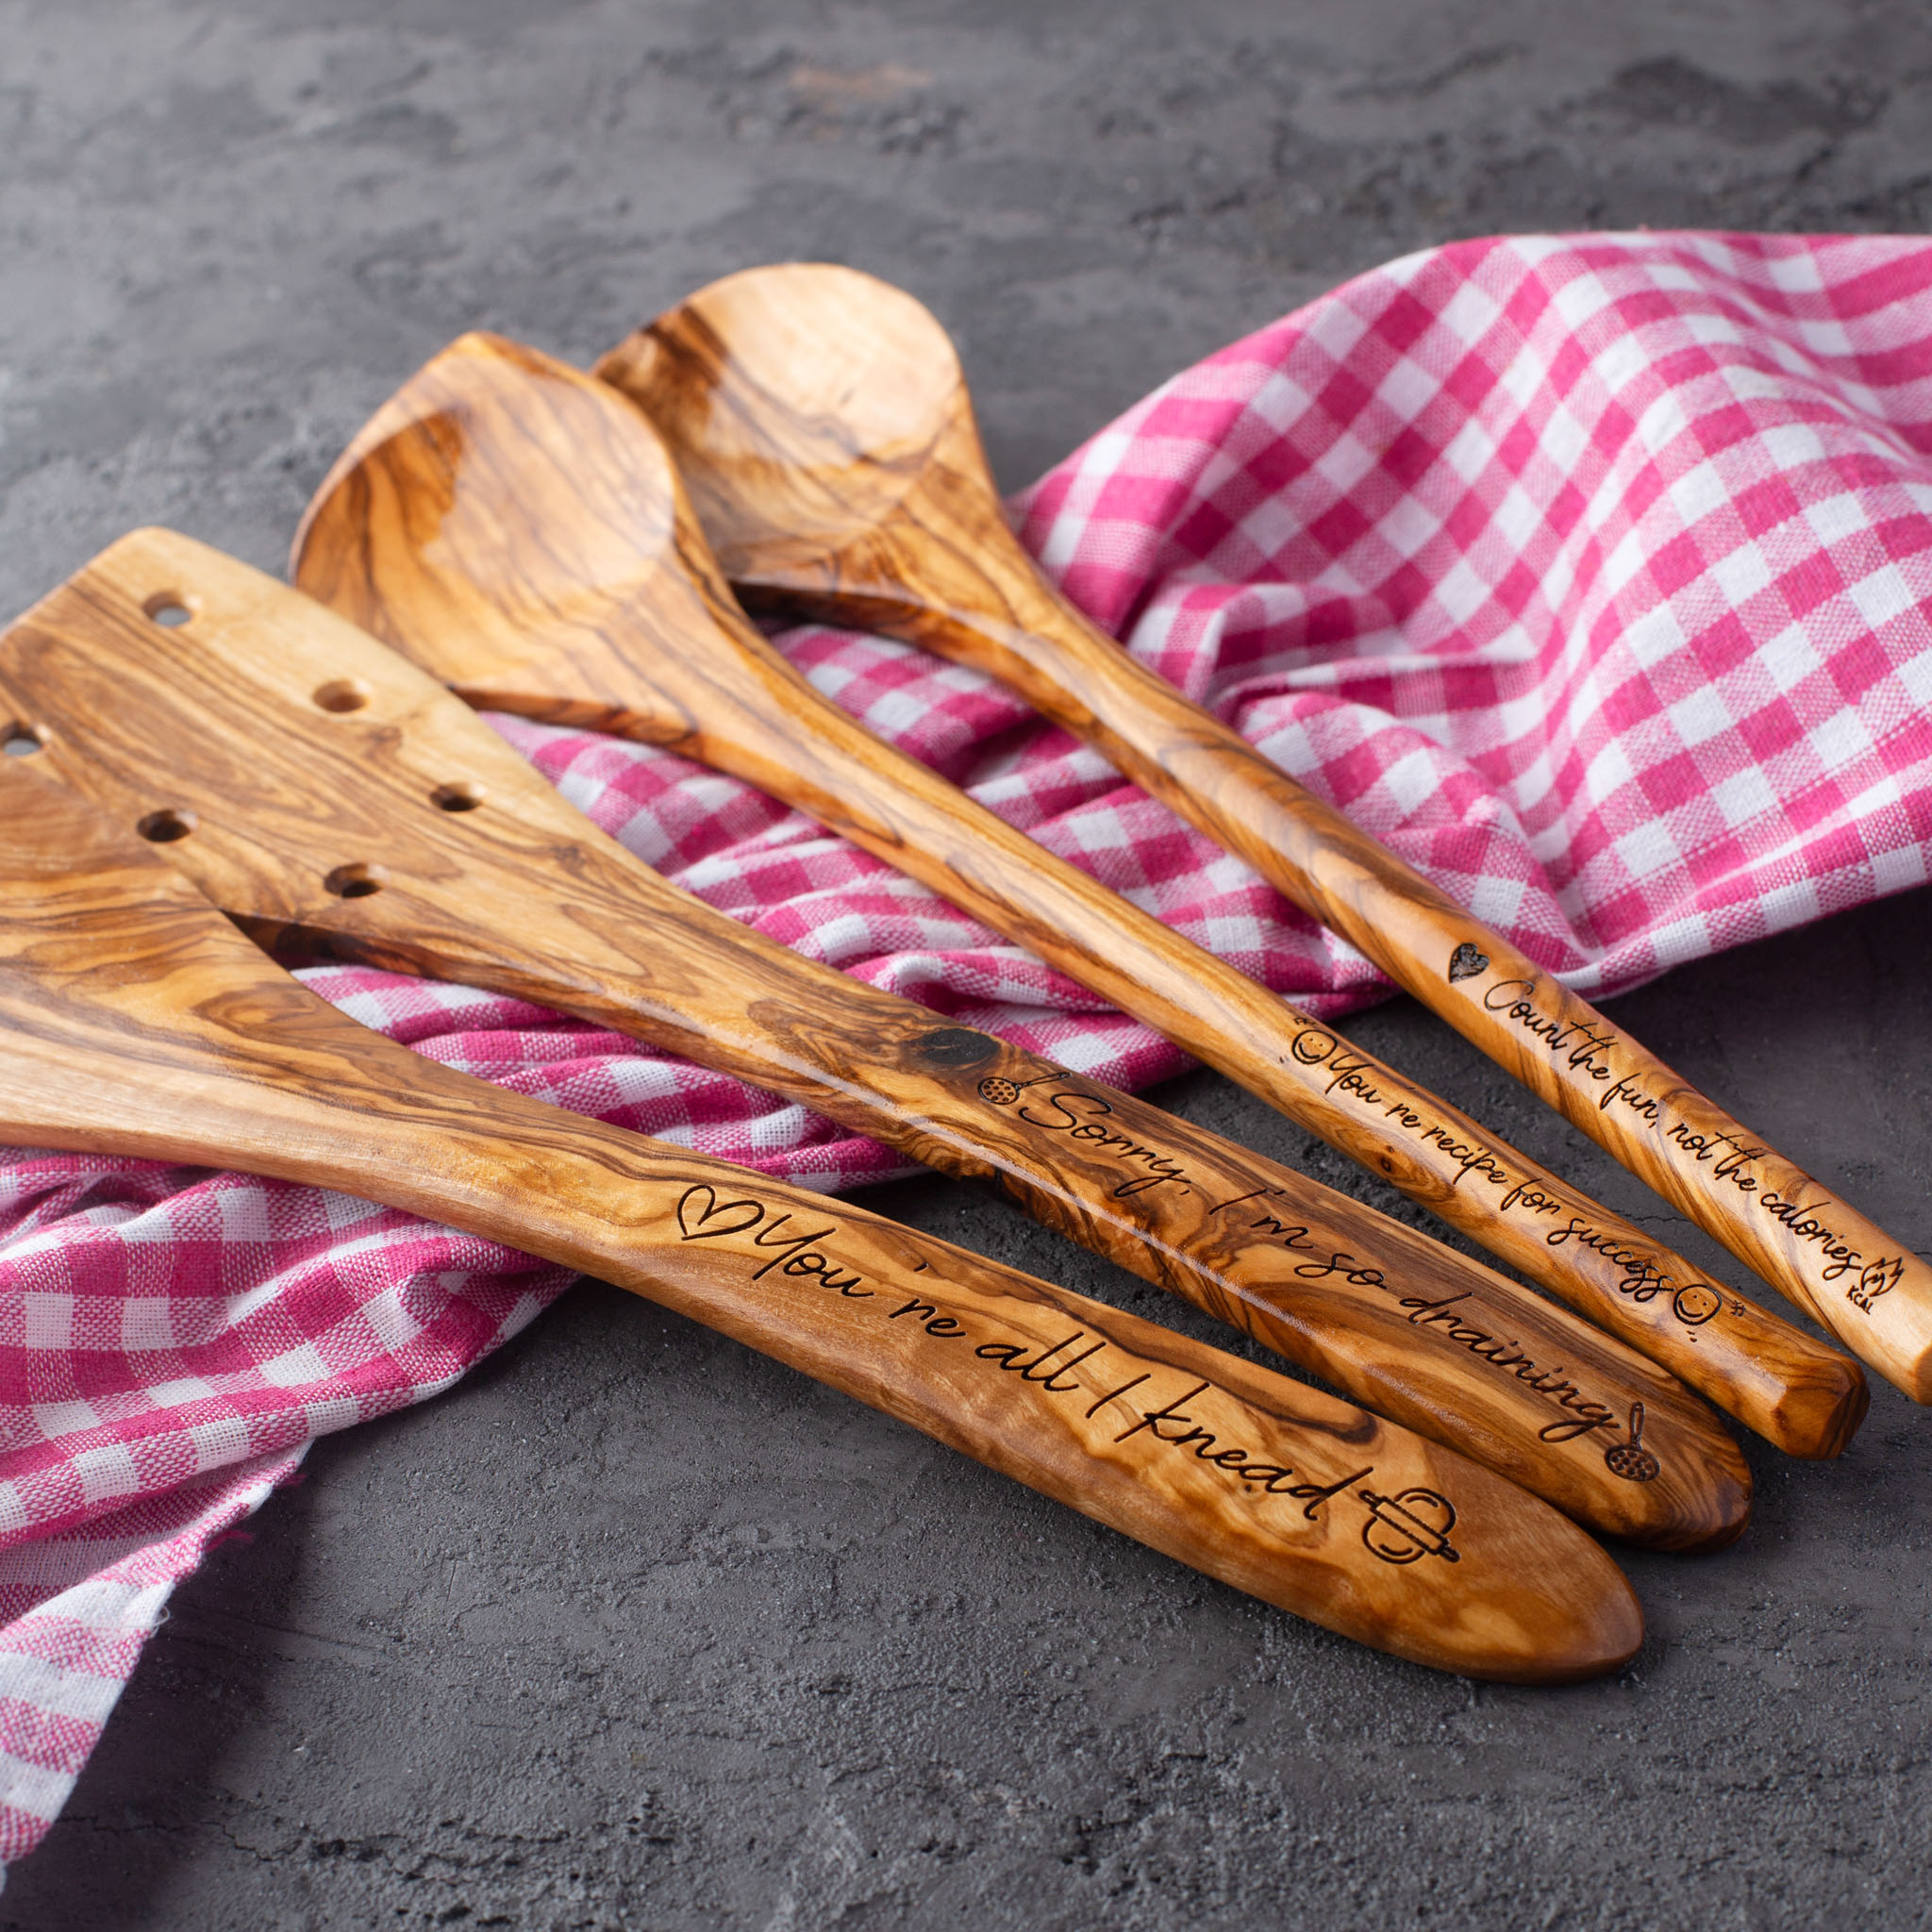 Wooden Ladle Spoons Set, Wood Kitchen Utensils Set Soup Spoon Set Wooden Spoon for Cooking, 3 Pcs